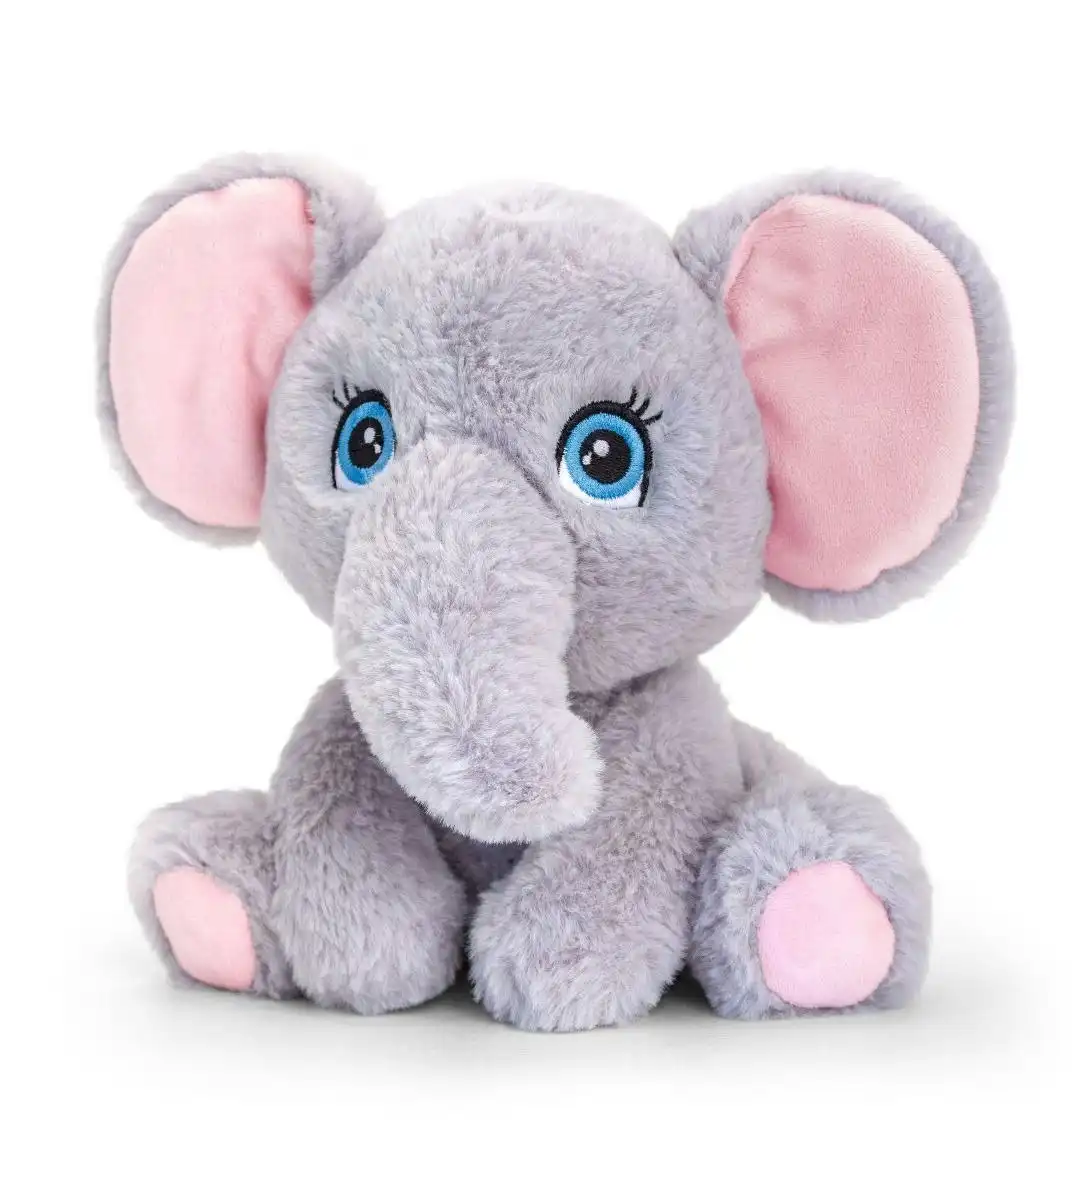 Adoptable World - Plush Elephant by Keeleco 16cm